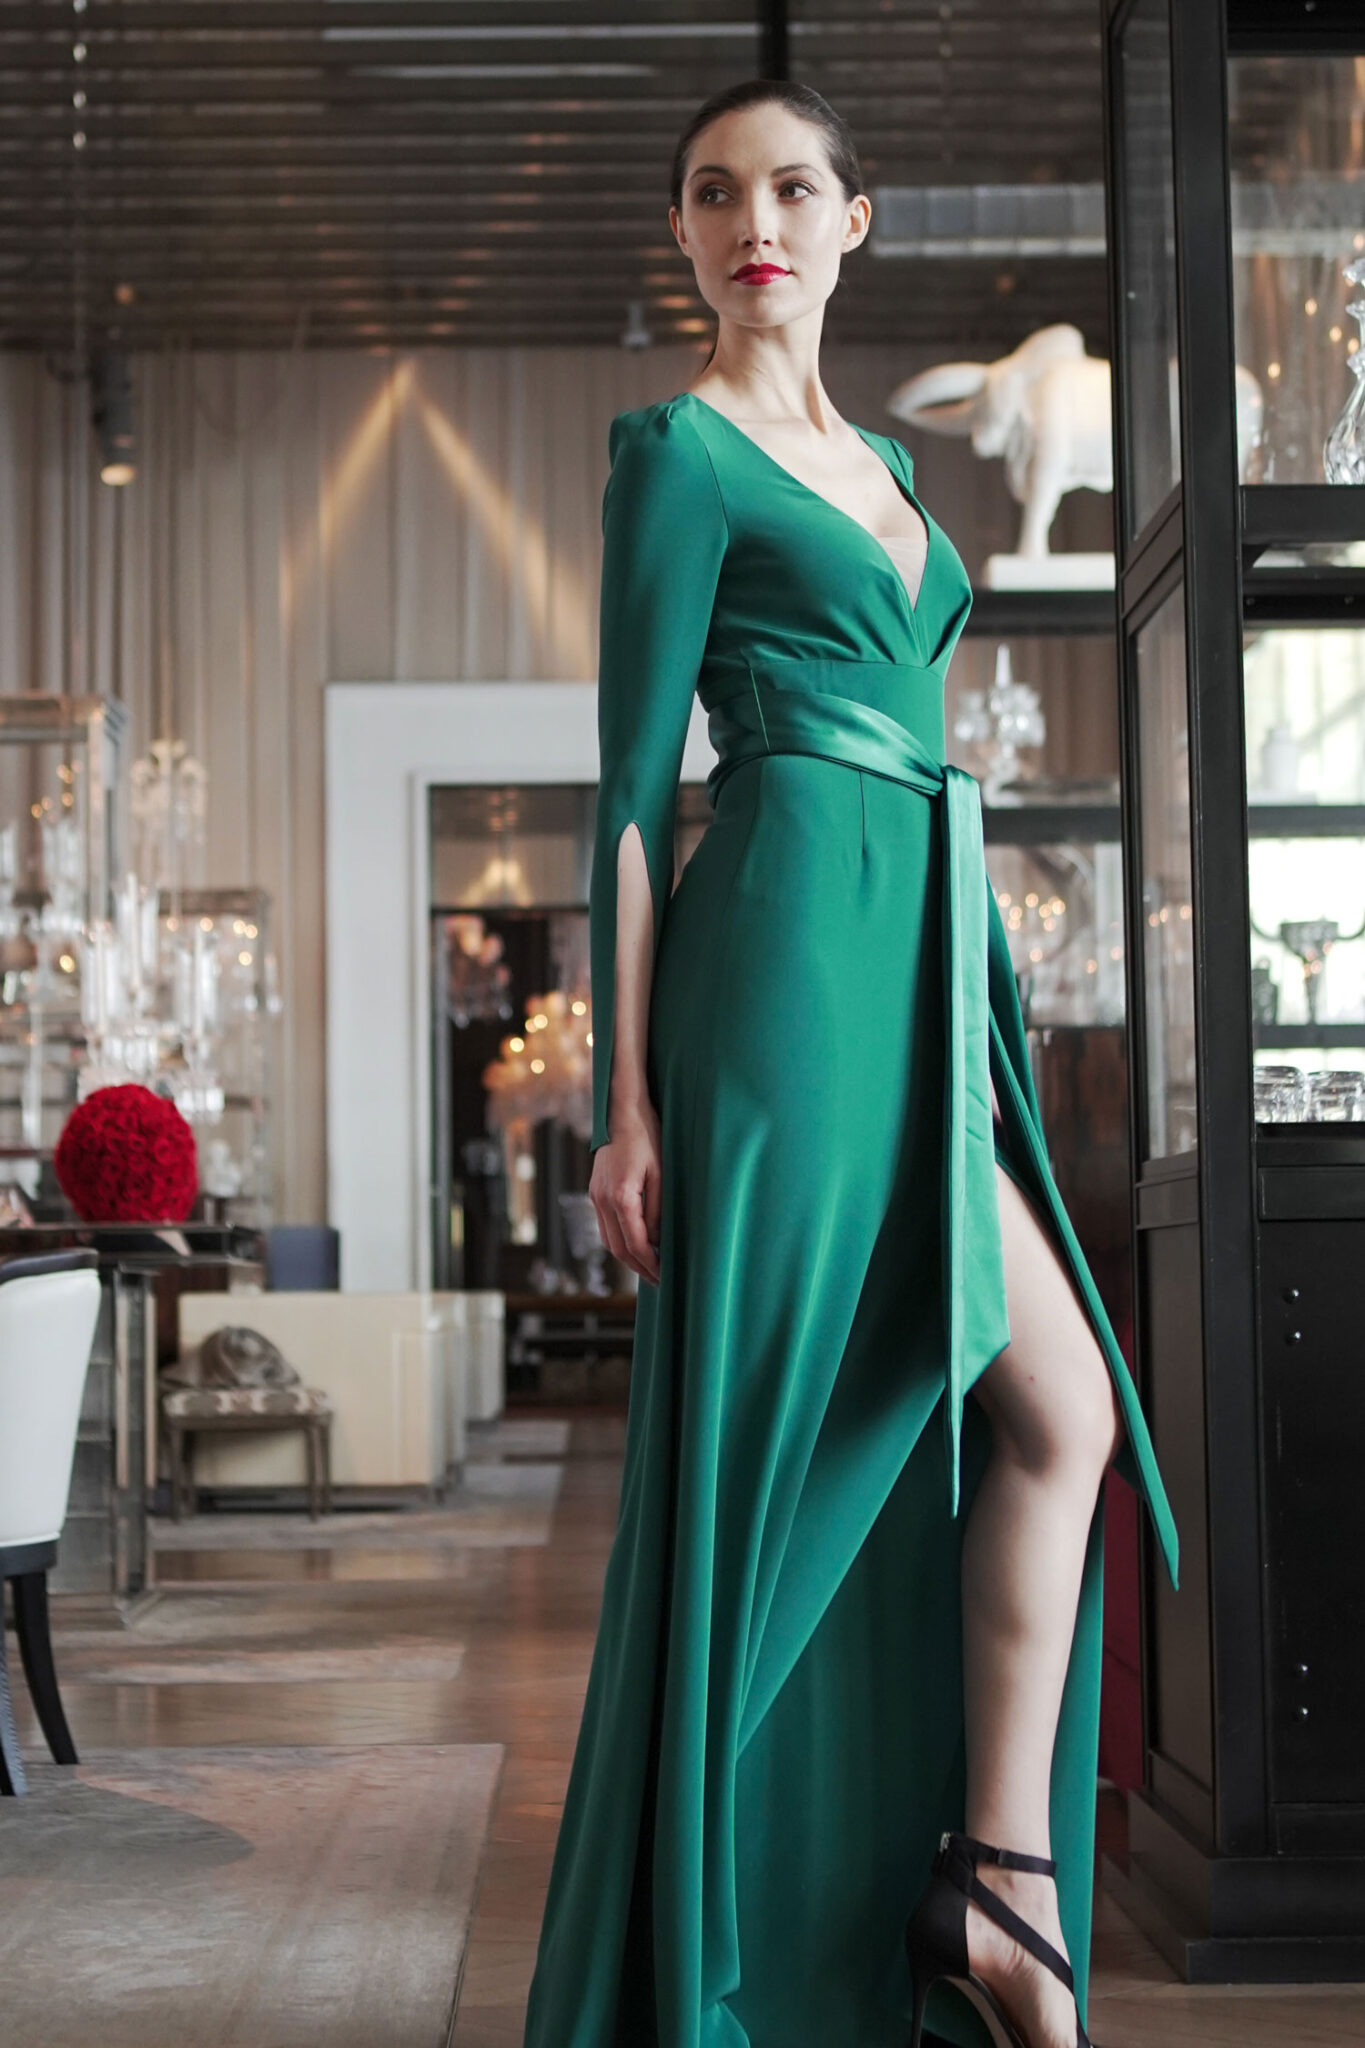 Fairytale collection - Look 1 - Open green dress with long sleevs - Verdin New York